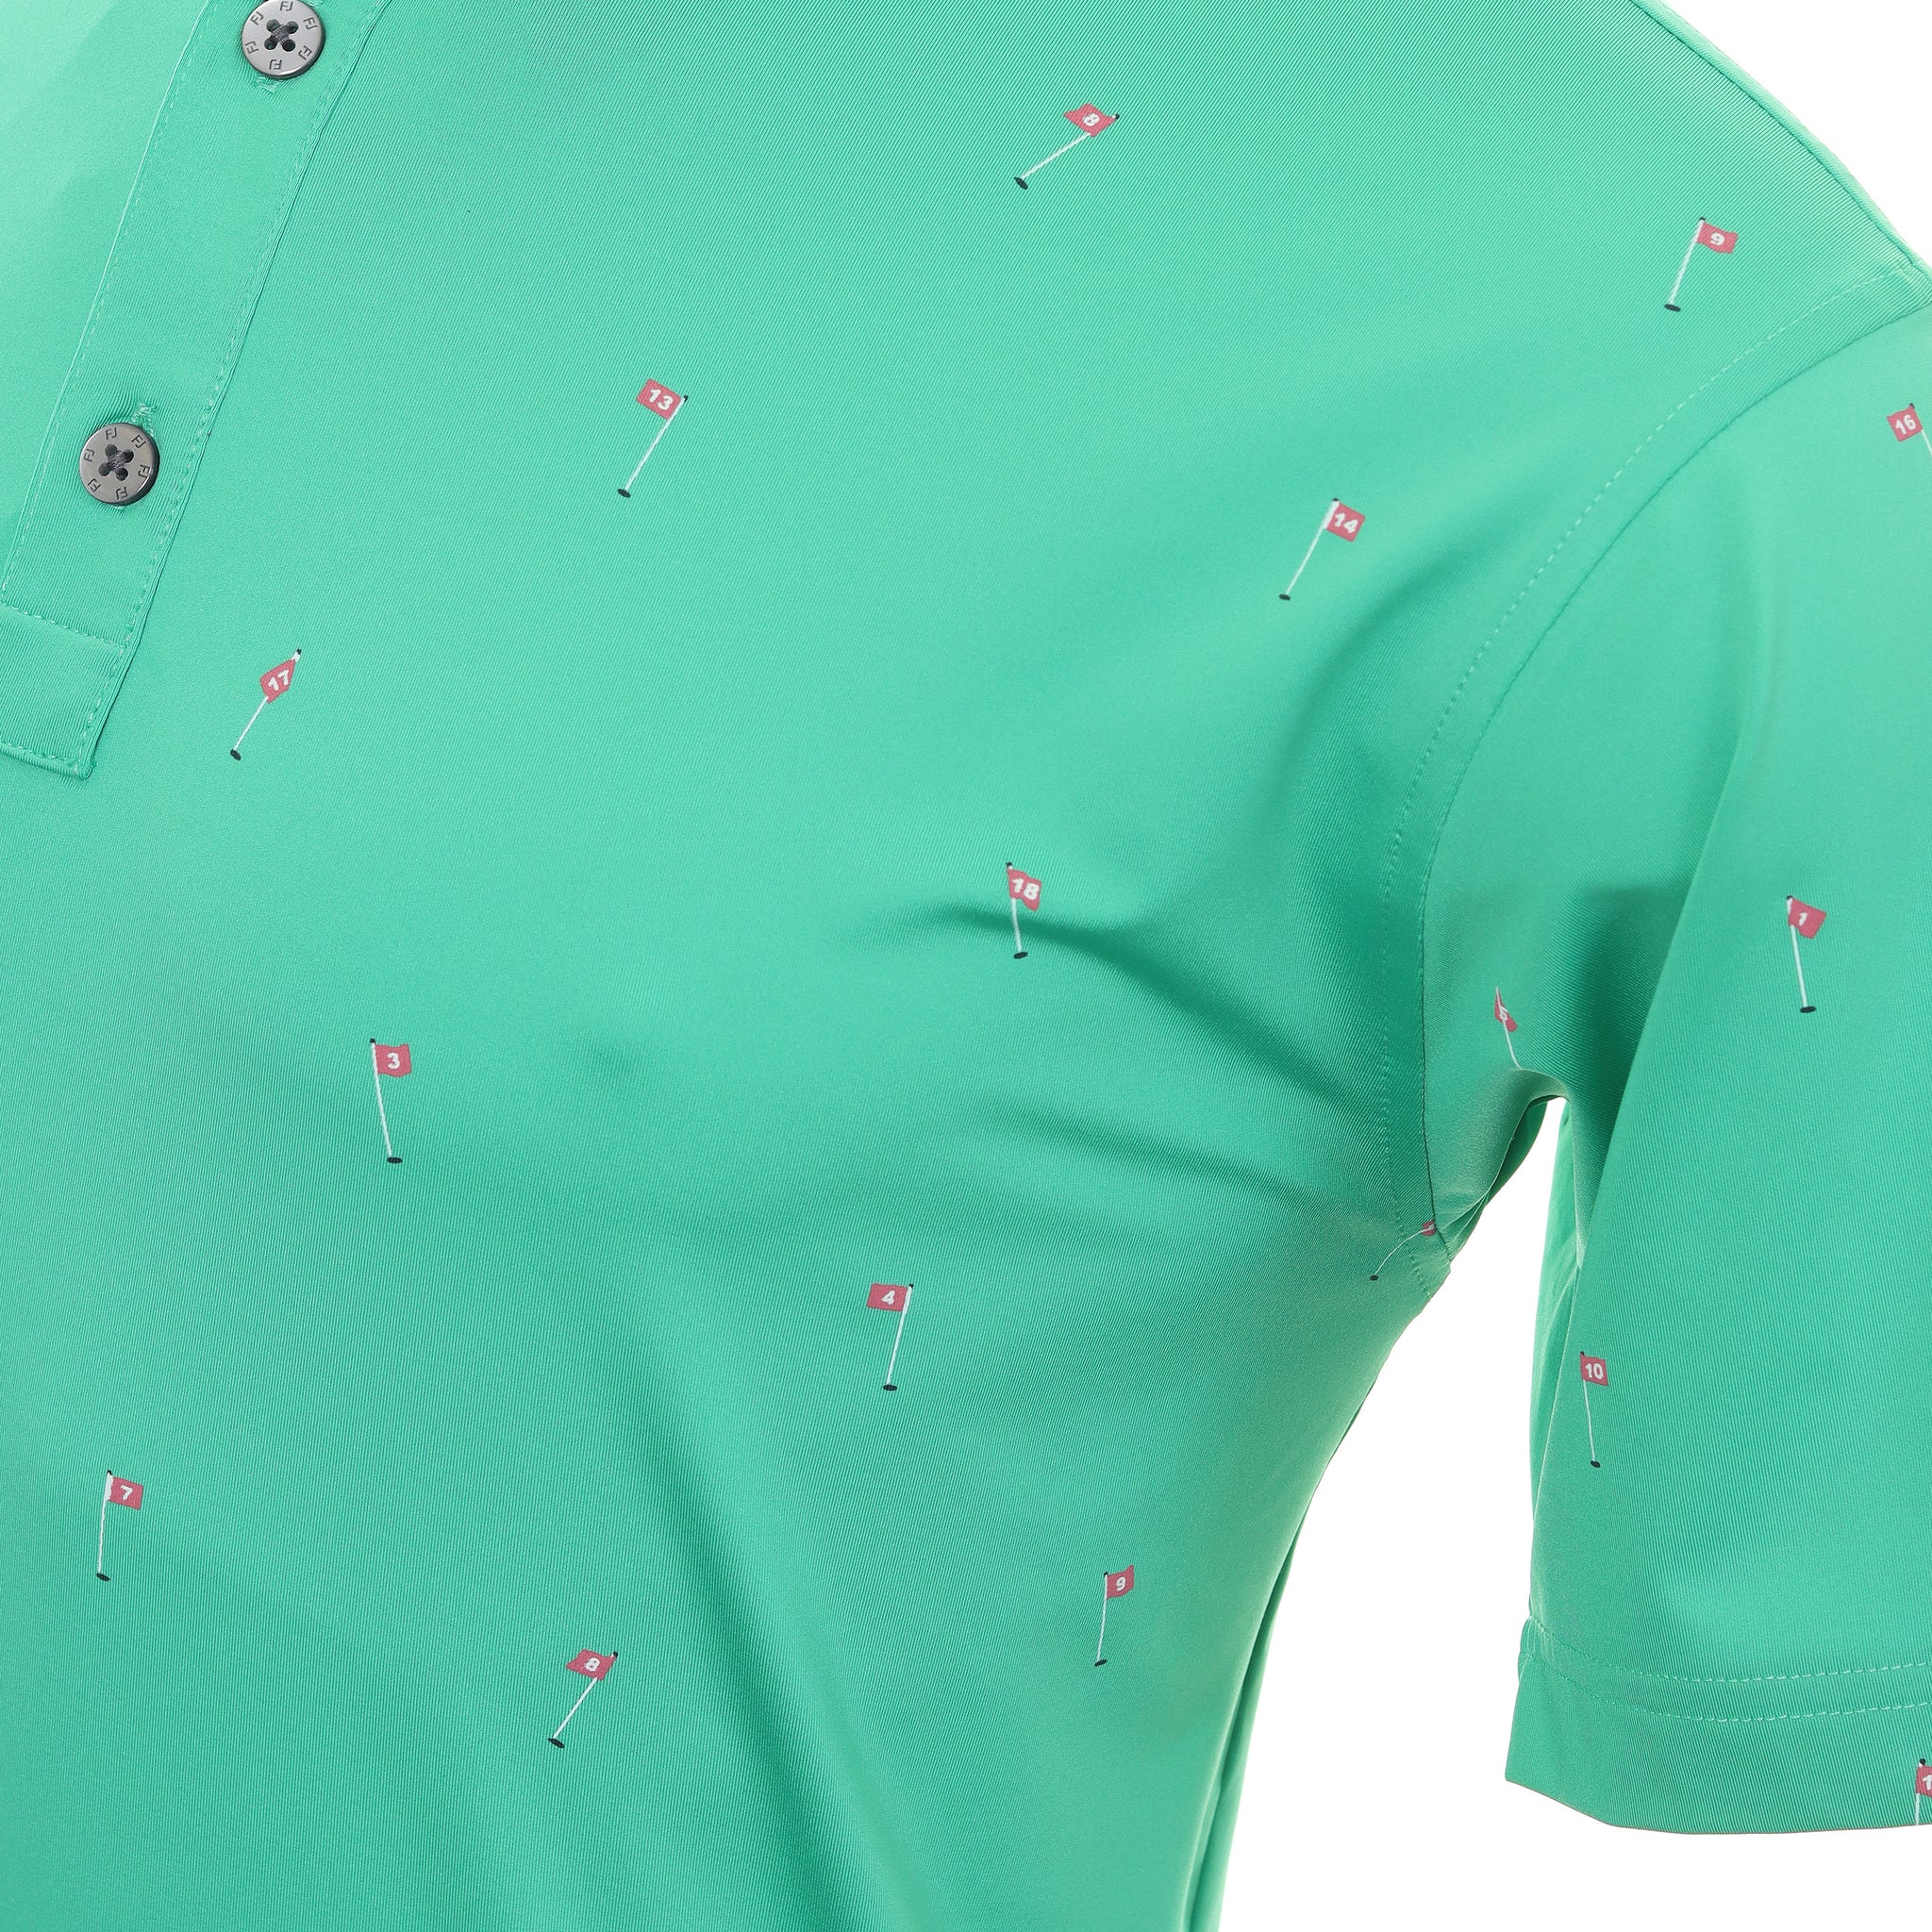 footjoy-18-holes-print-golf-shirt-88790-sea-green